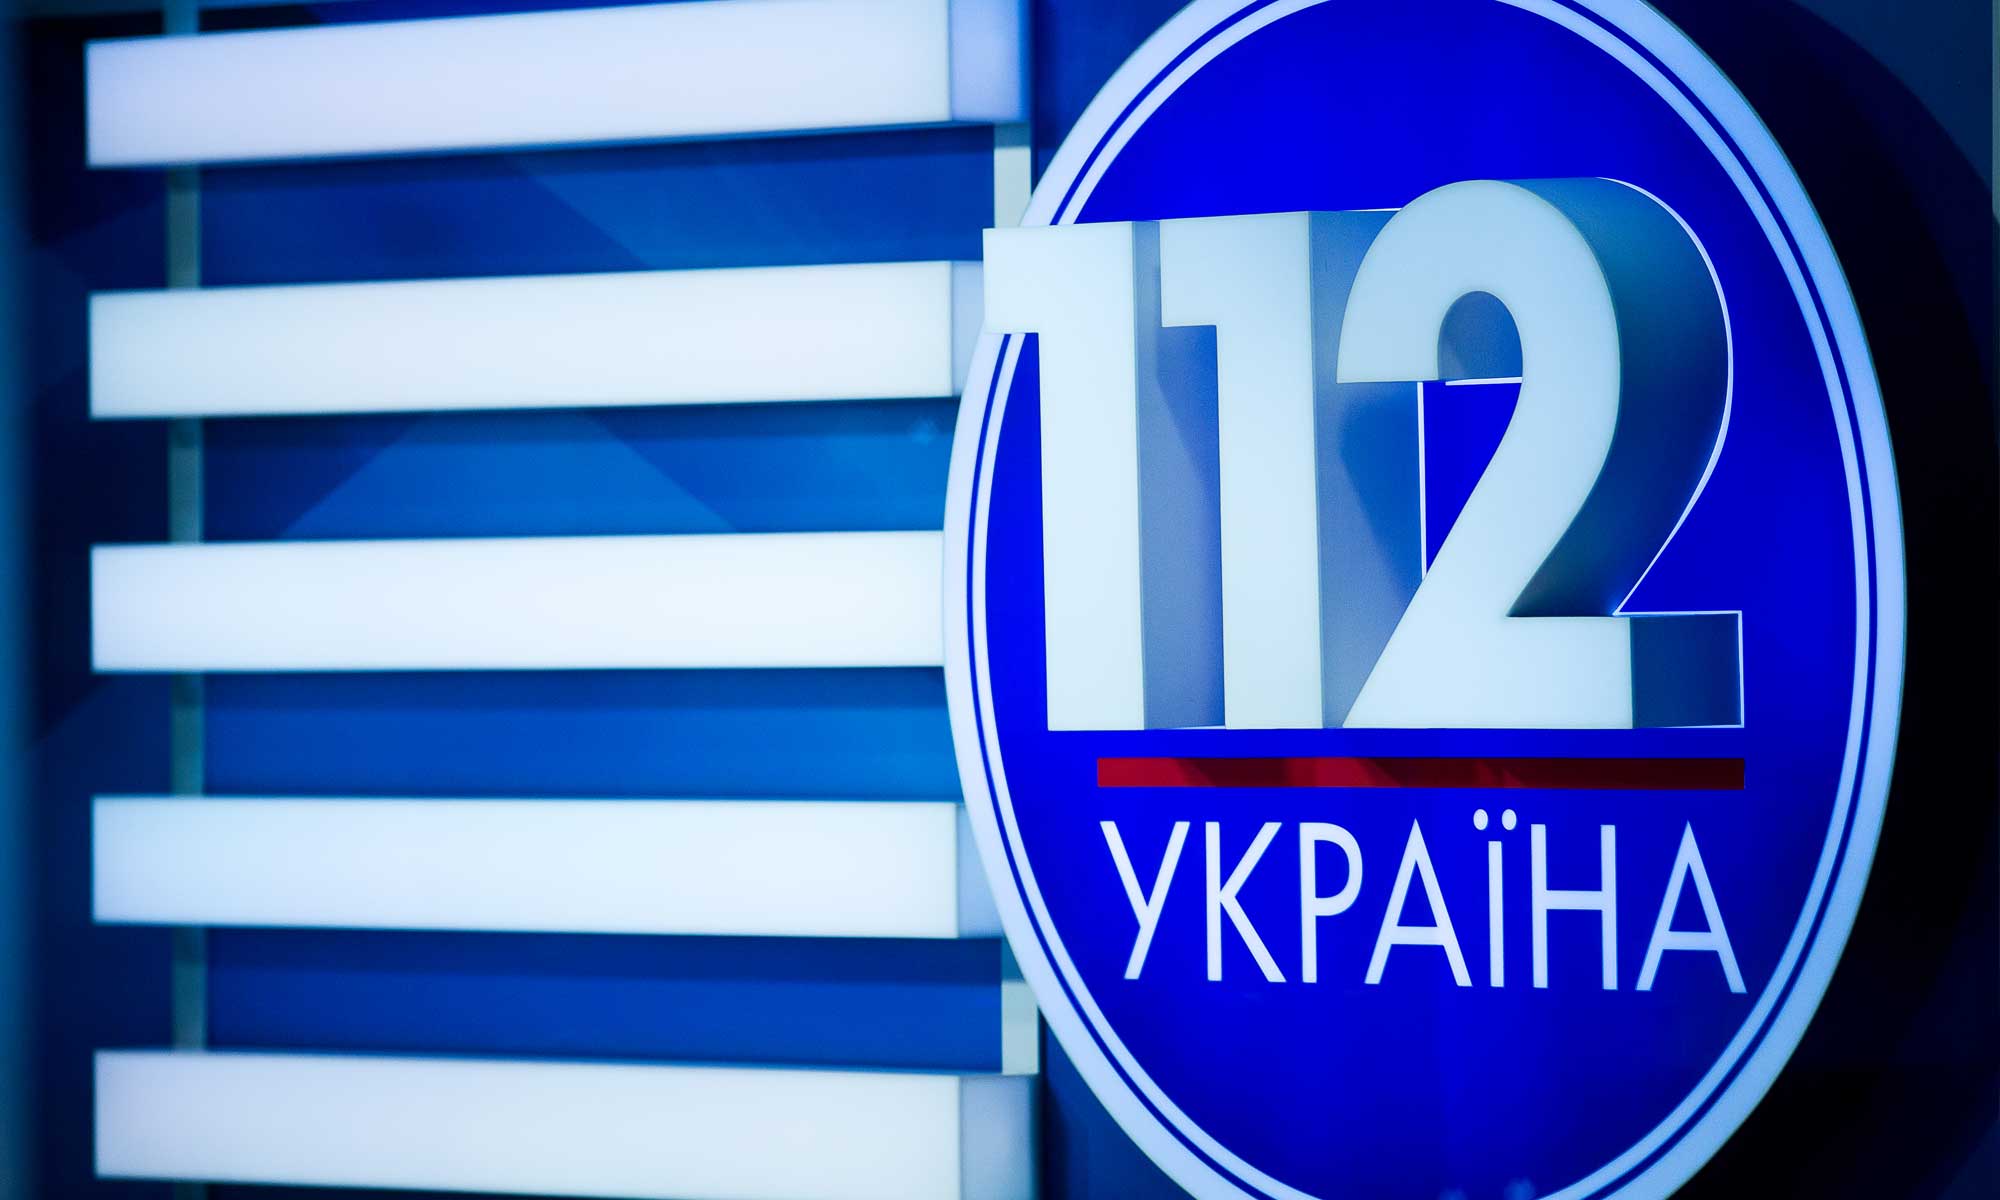 112 канал украина